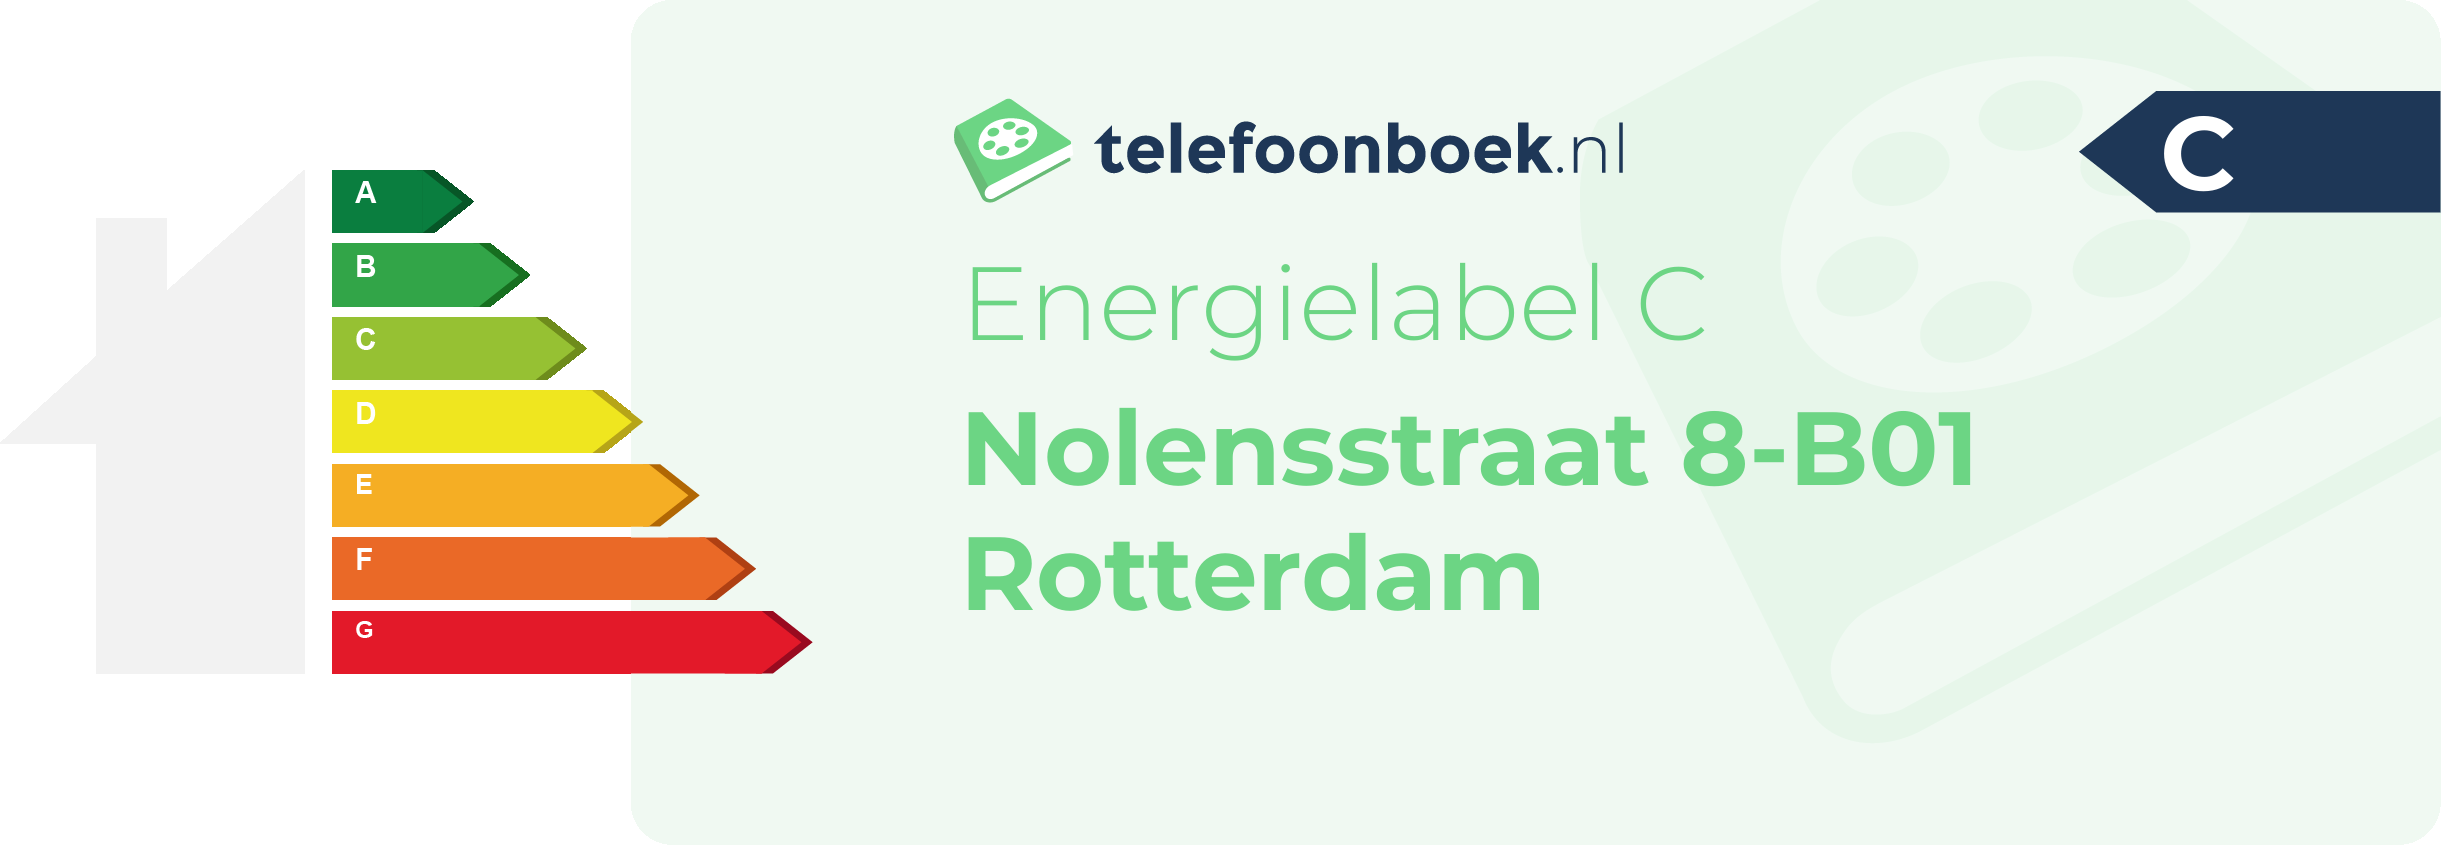 Energielabel Nolensstraat 8-B01 Rotterdam